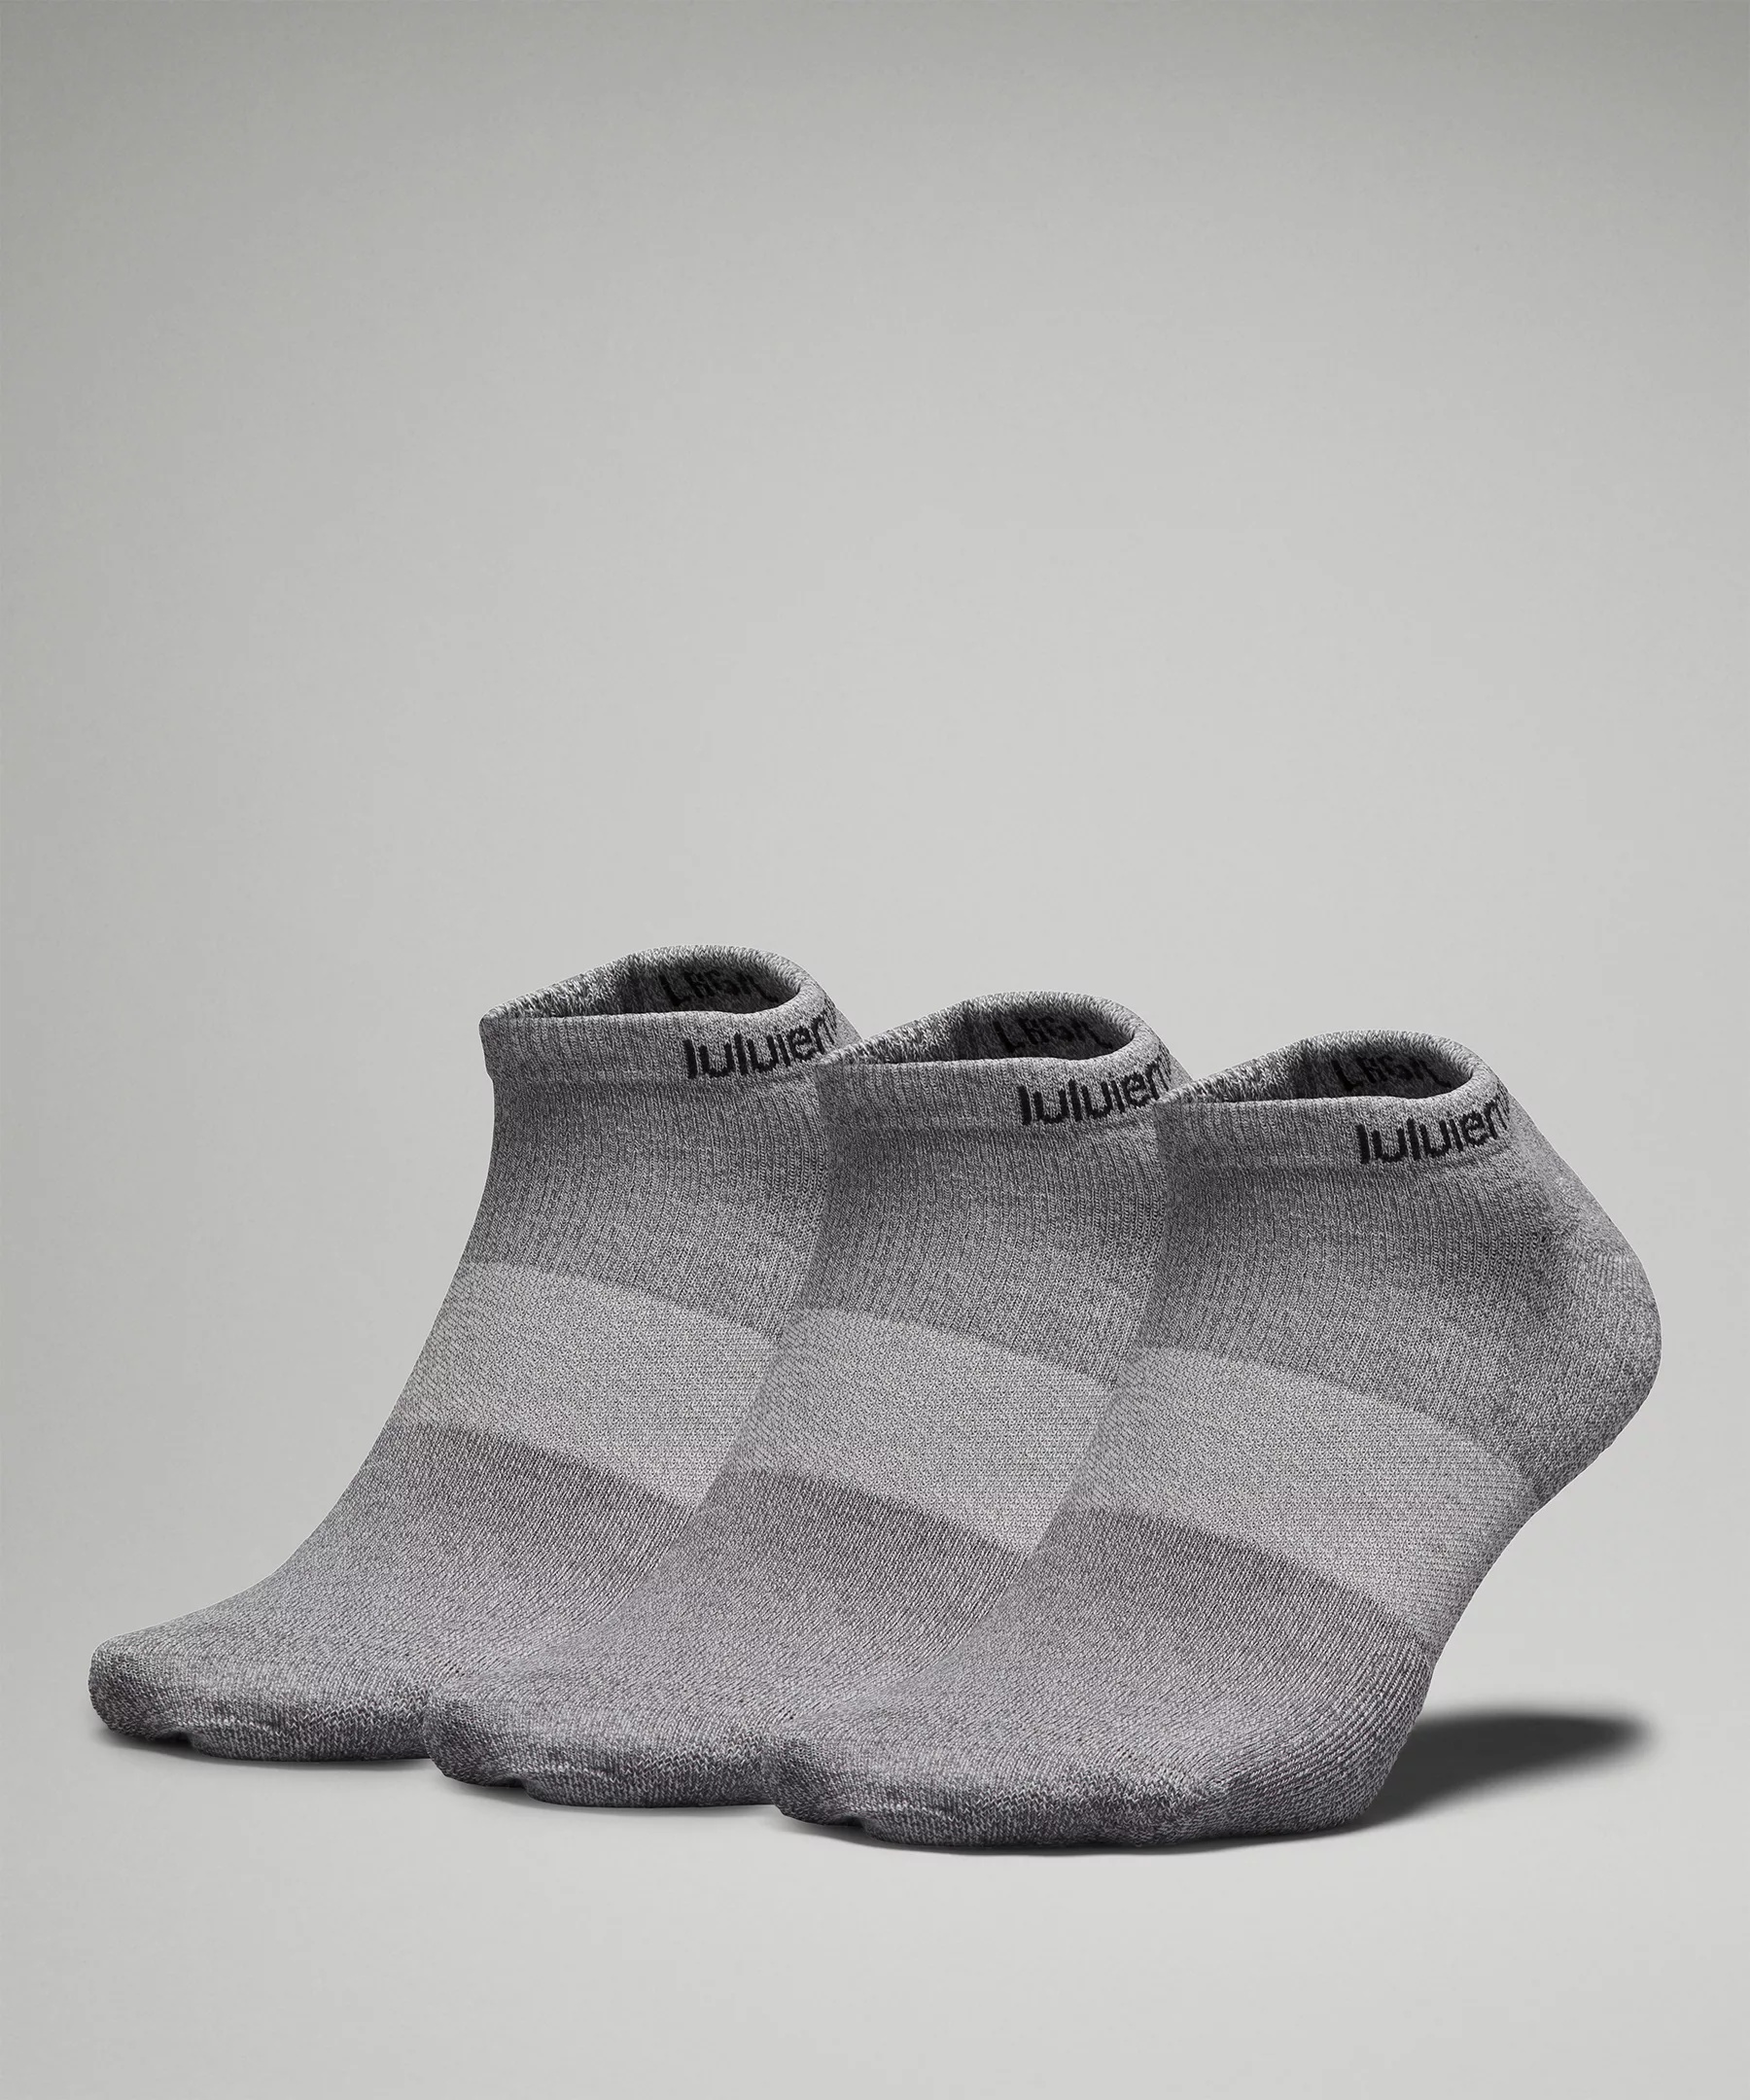 Men's Daily Stride Comfort Low-Ankle Socks *3 Pack - 1